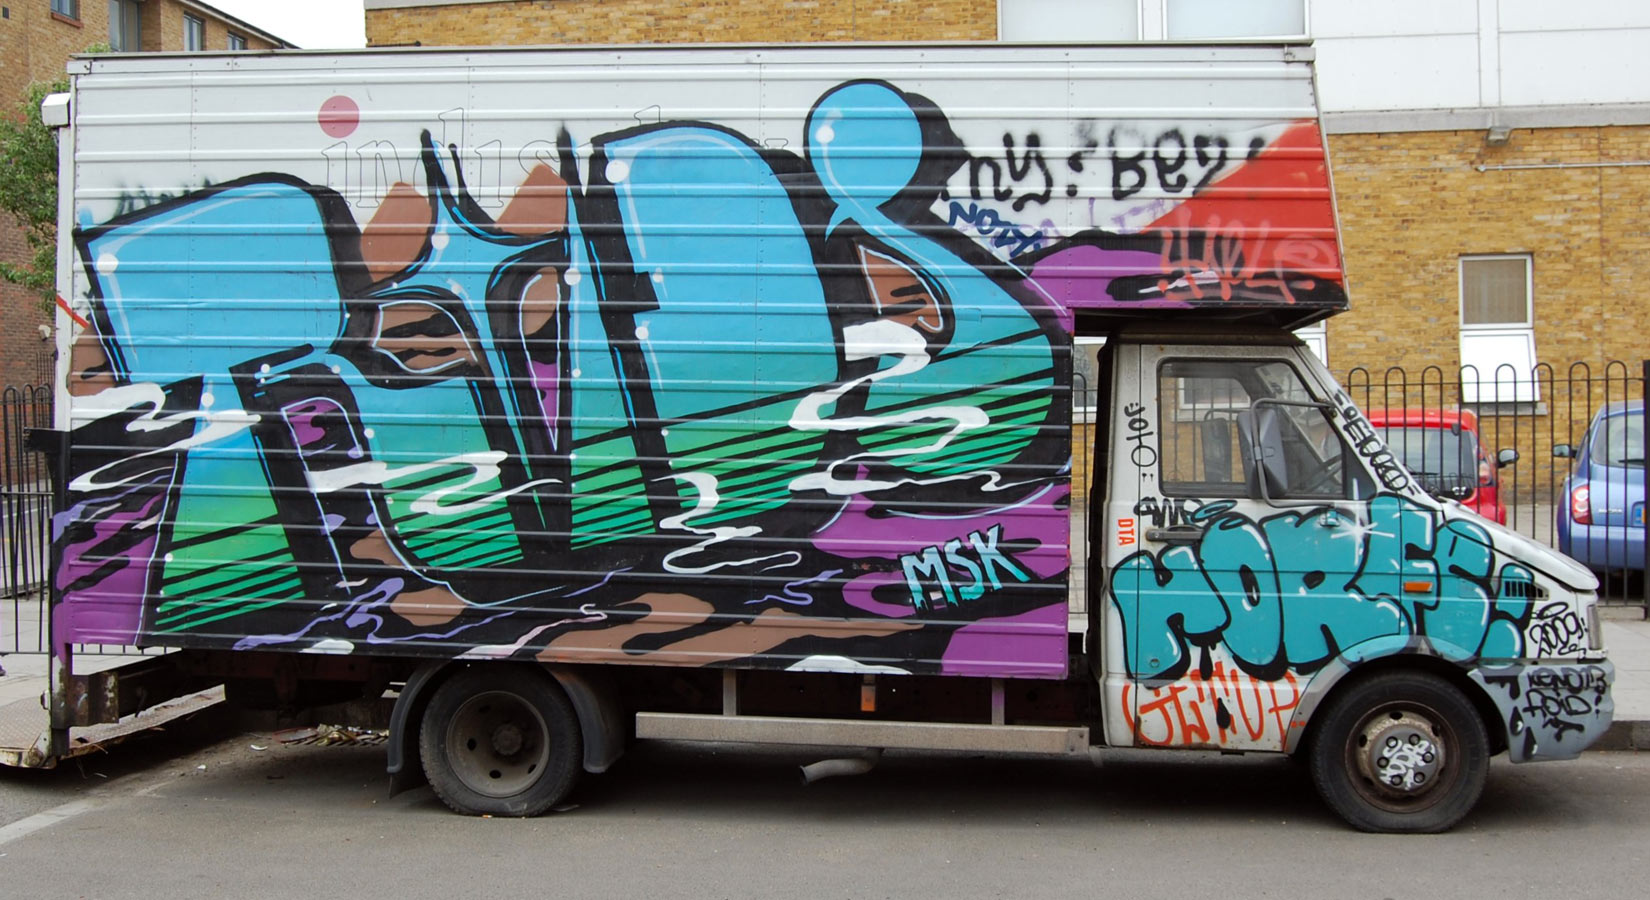  roid msk horfe truck london ukingdom